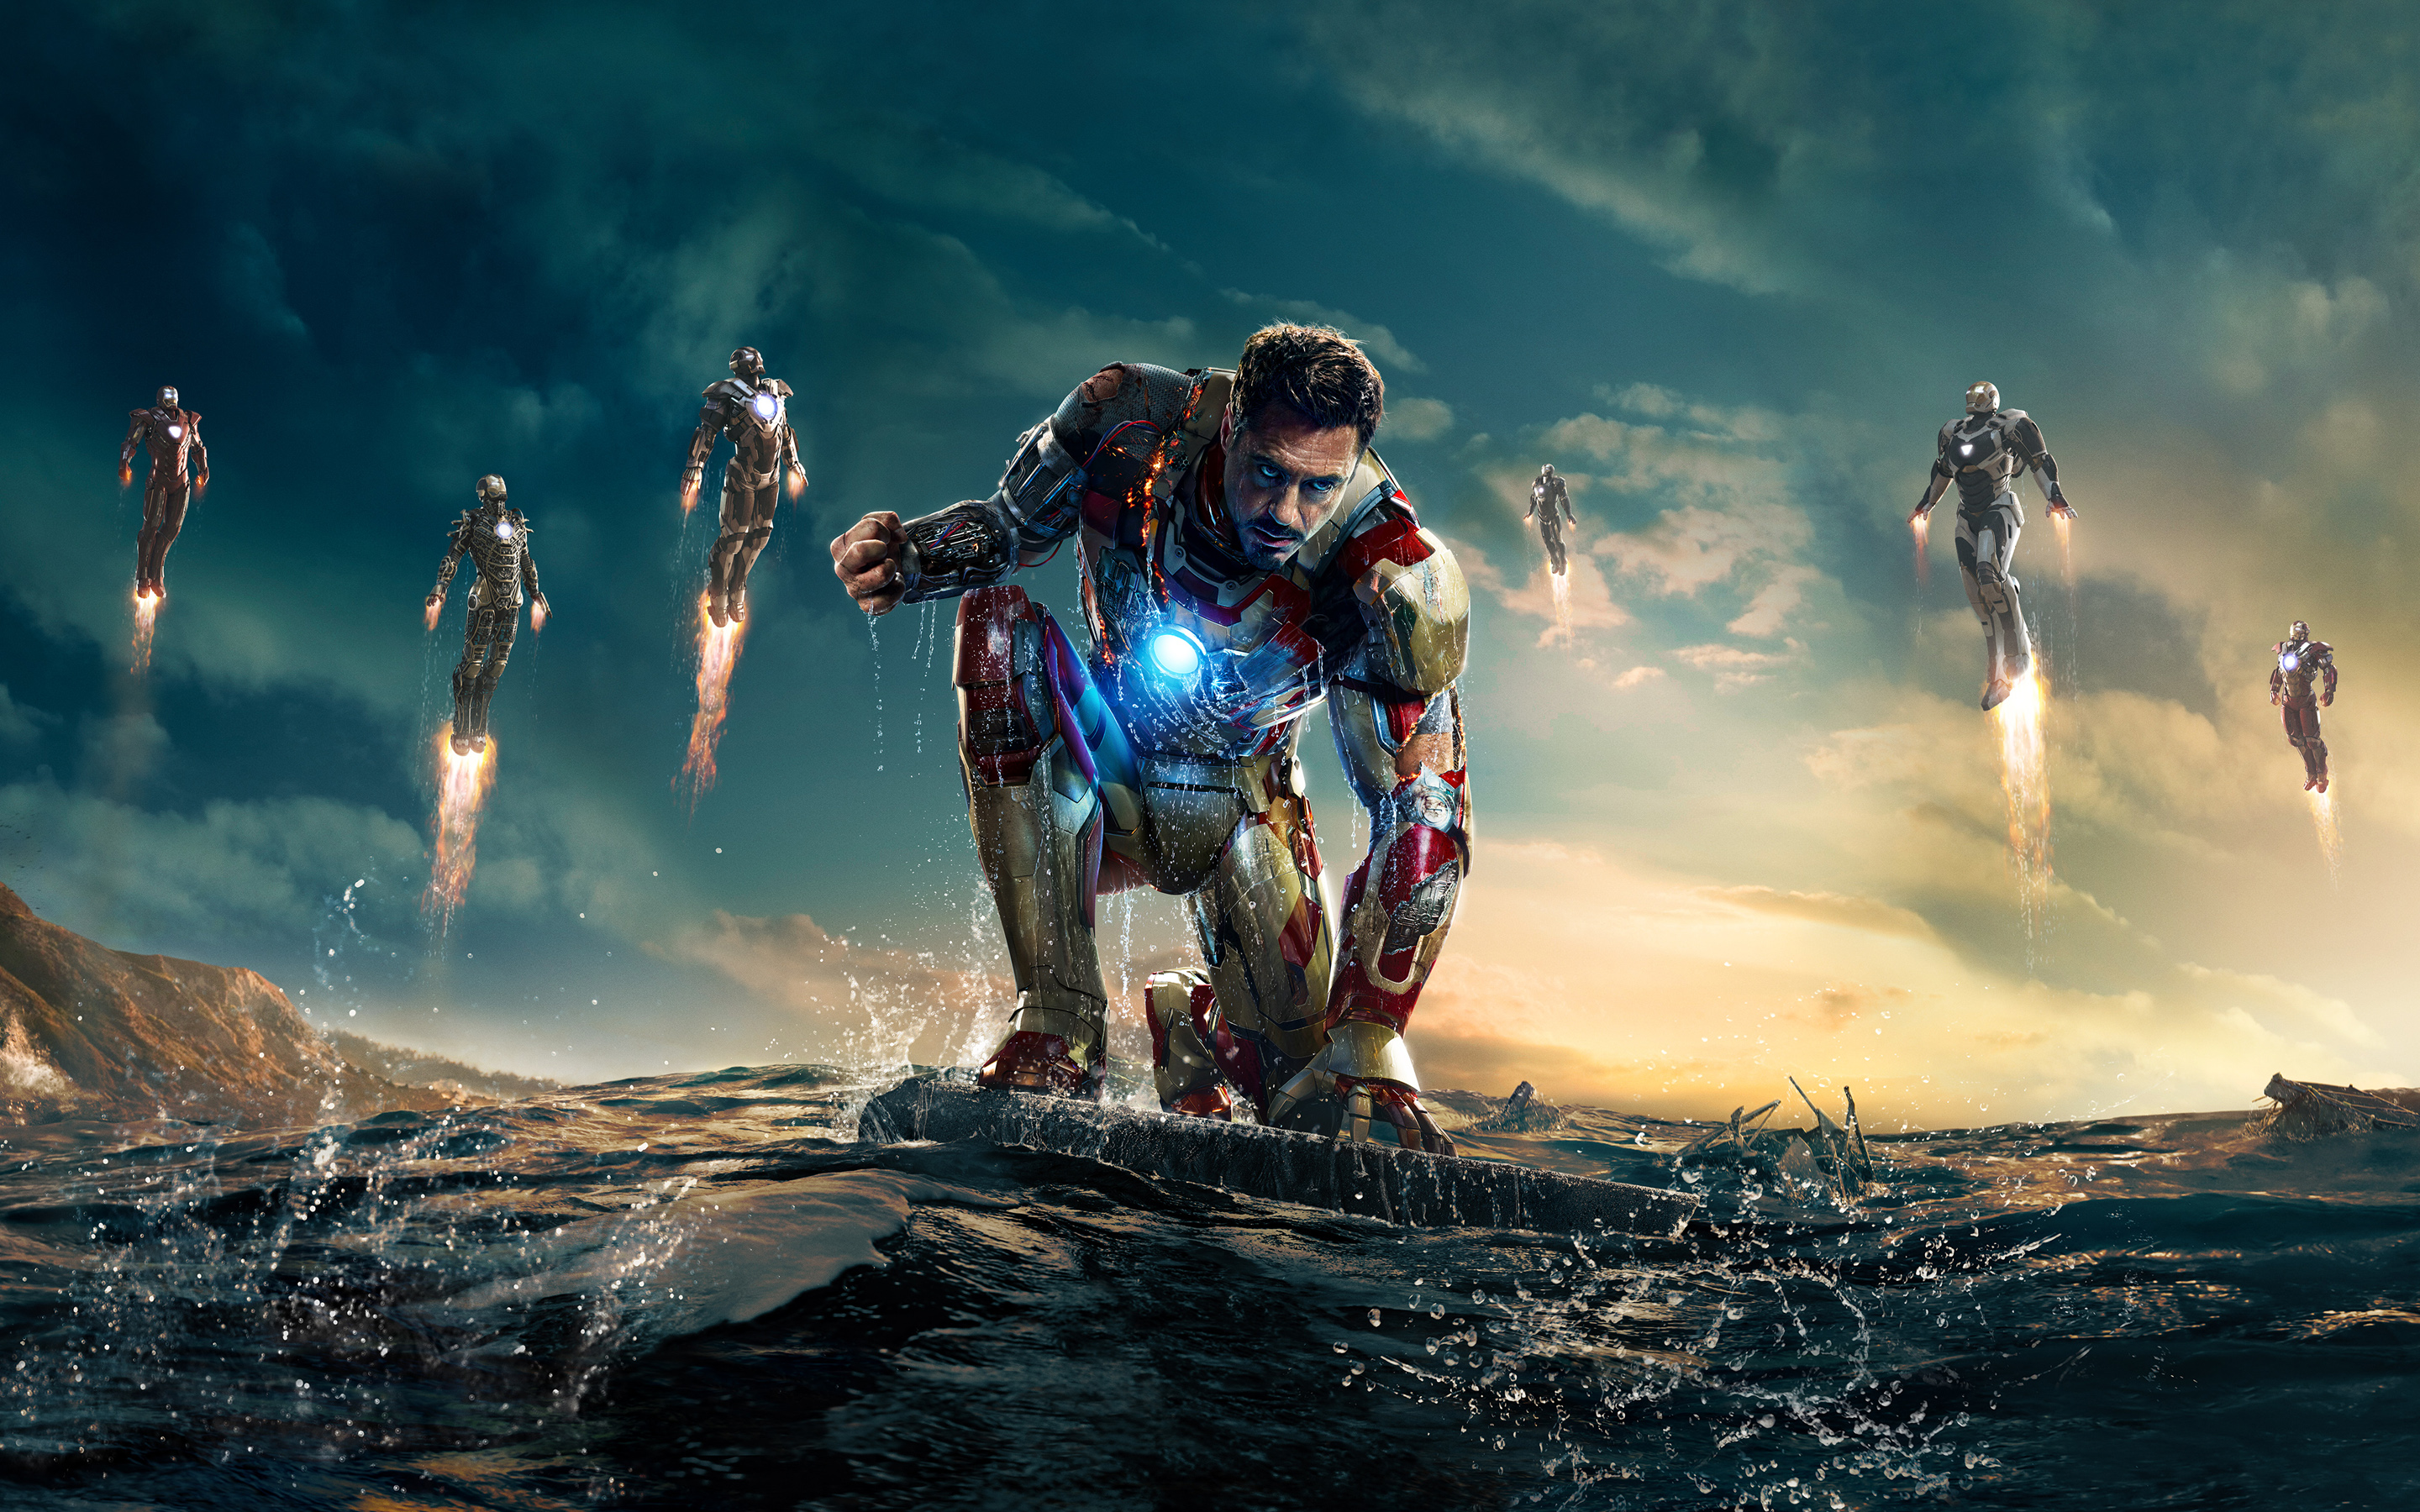 Download 2013 Iron Man 3 HD Wallpaper 2350 Full Size